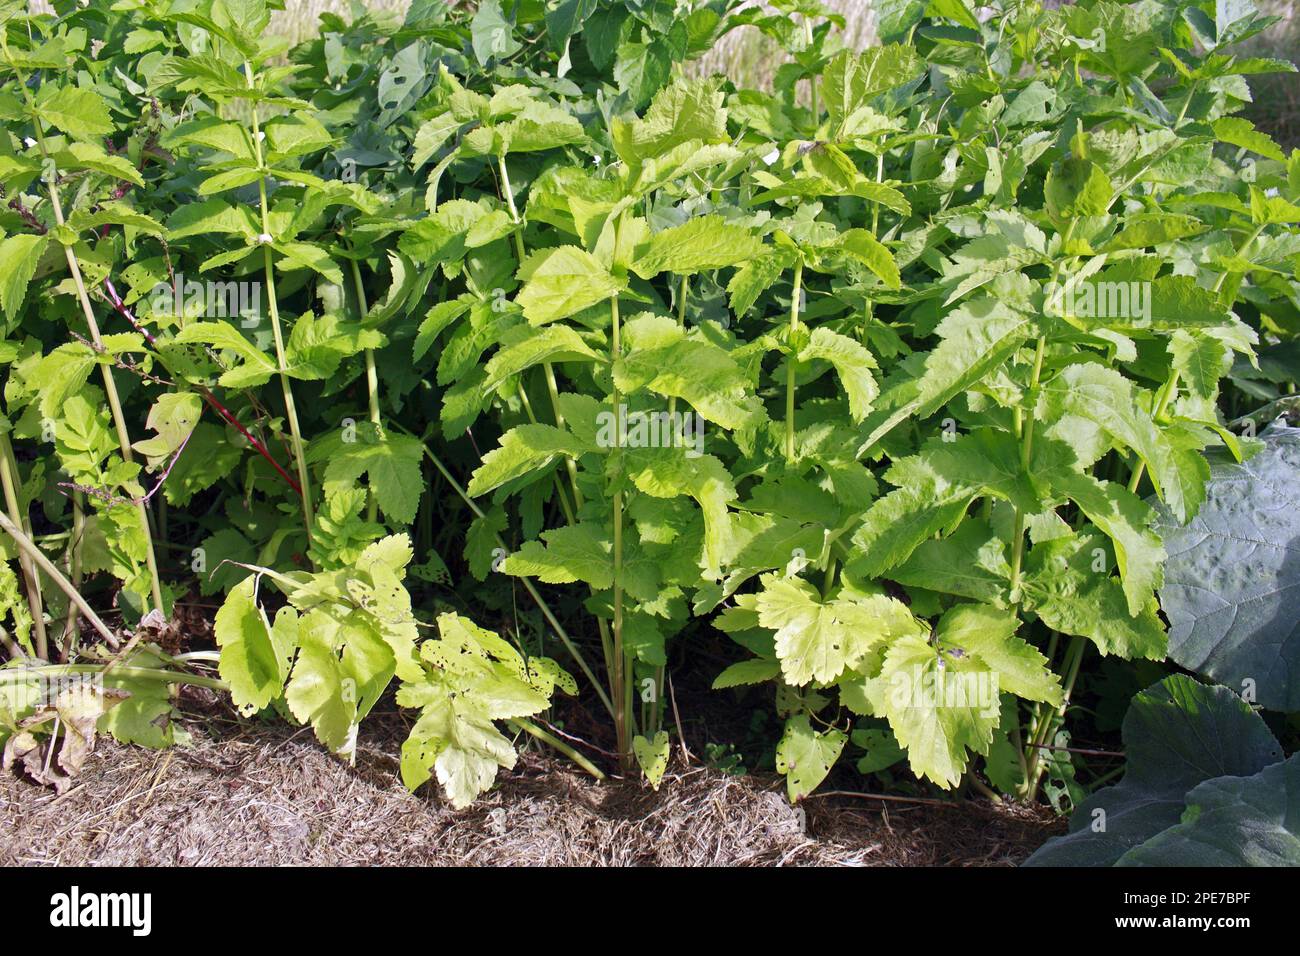 Parsnip (Pastinaca sativa) crop, growing in garden vegetable plot, Bacton, Suffolk, England, United Kingdom Stock Photo